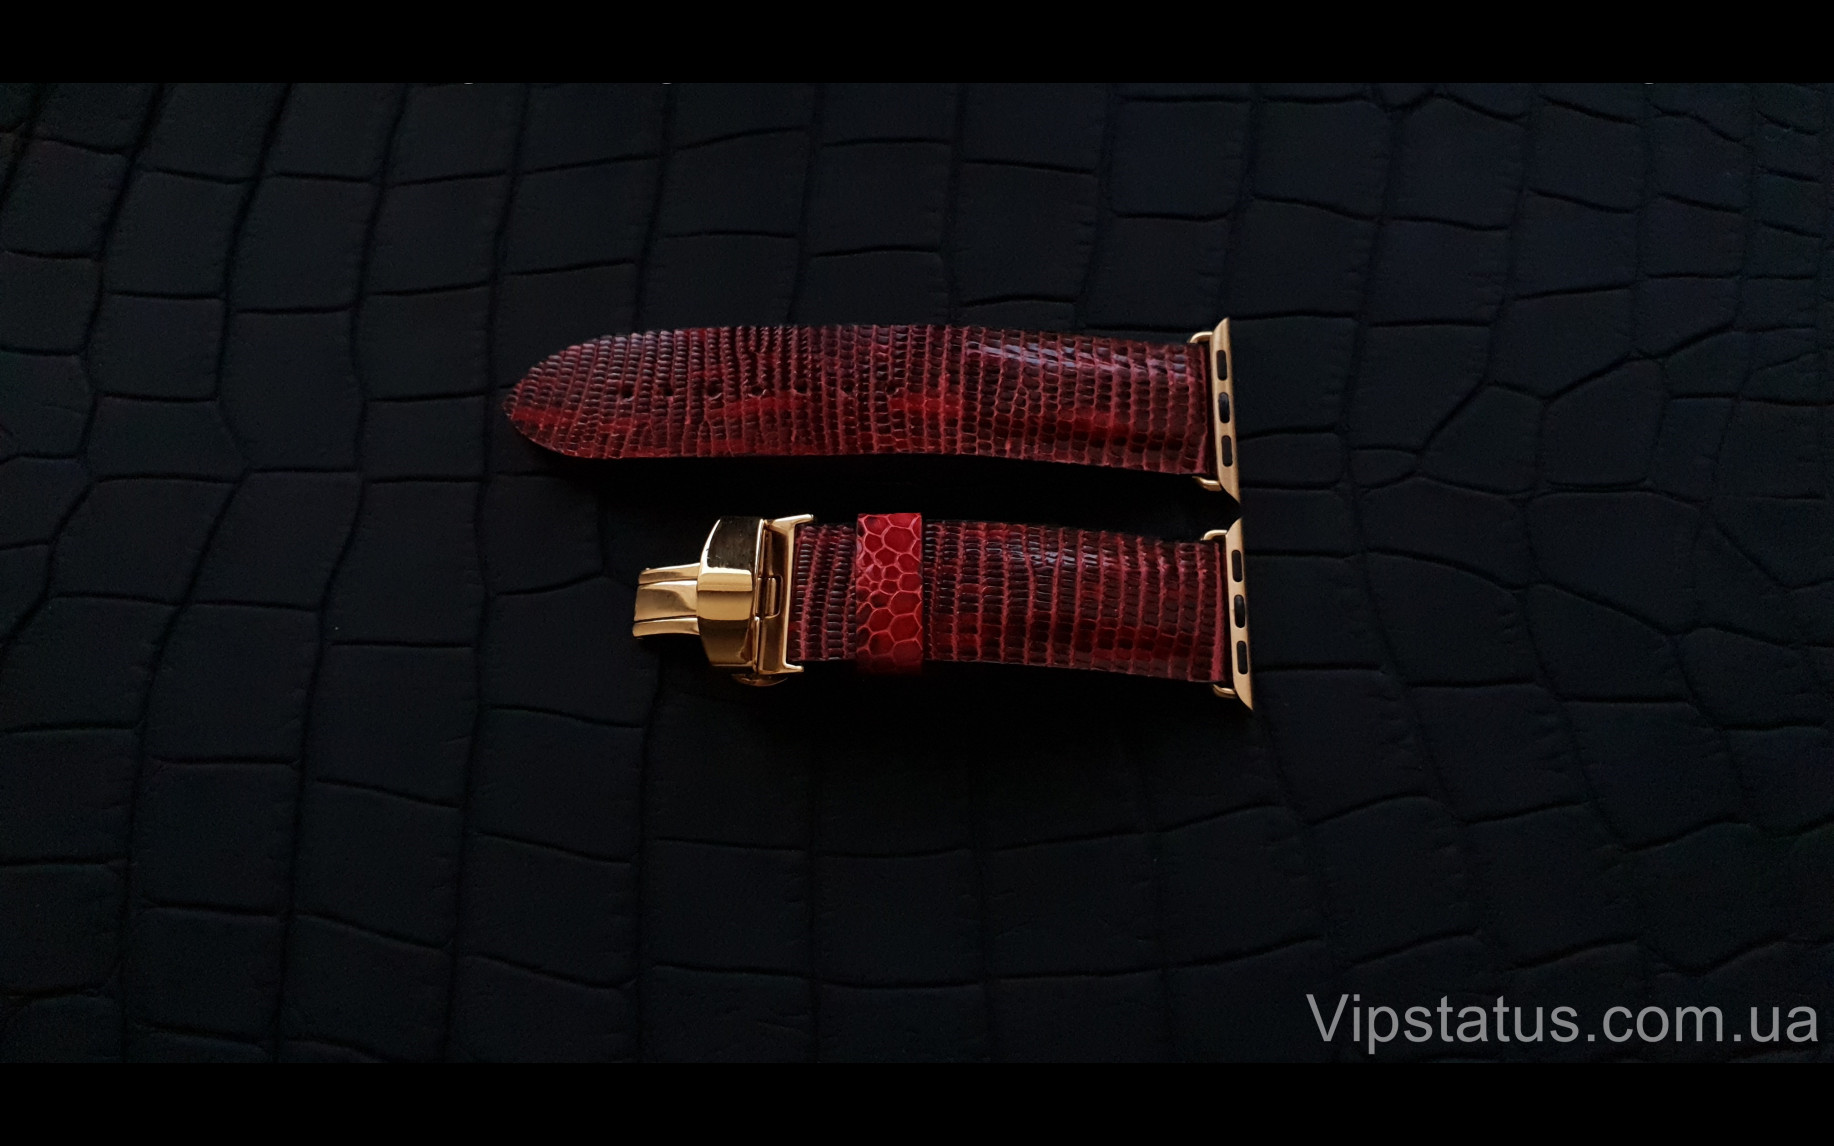 Elite Эксклюзивный ремешок для часов Apple кожа игуаны Exclusive Iguana Leather Strap for Apple watches image 2